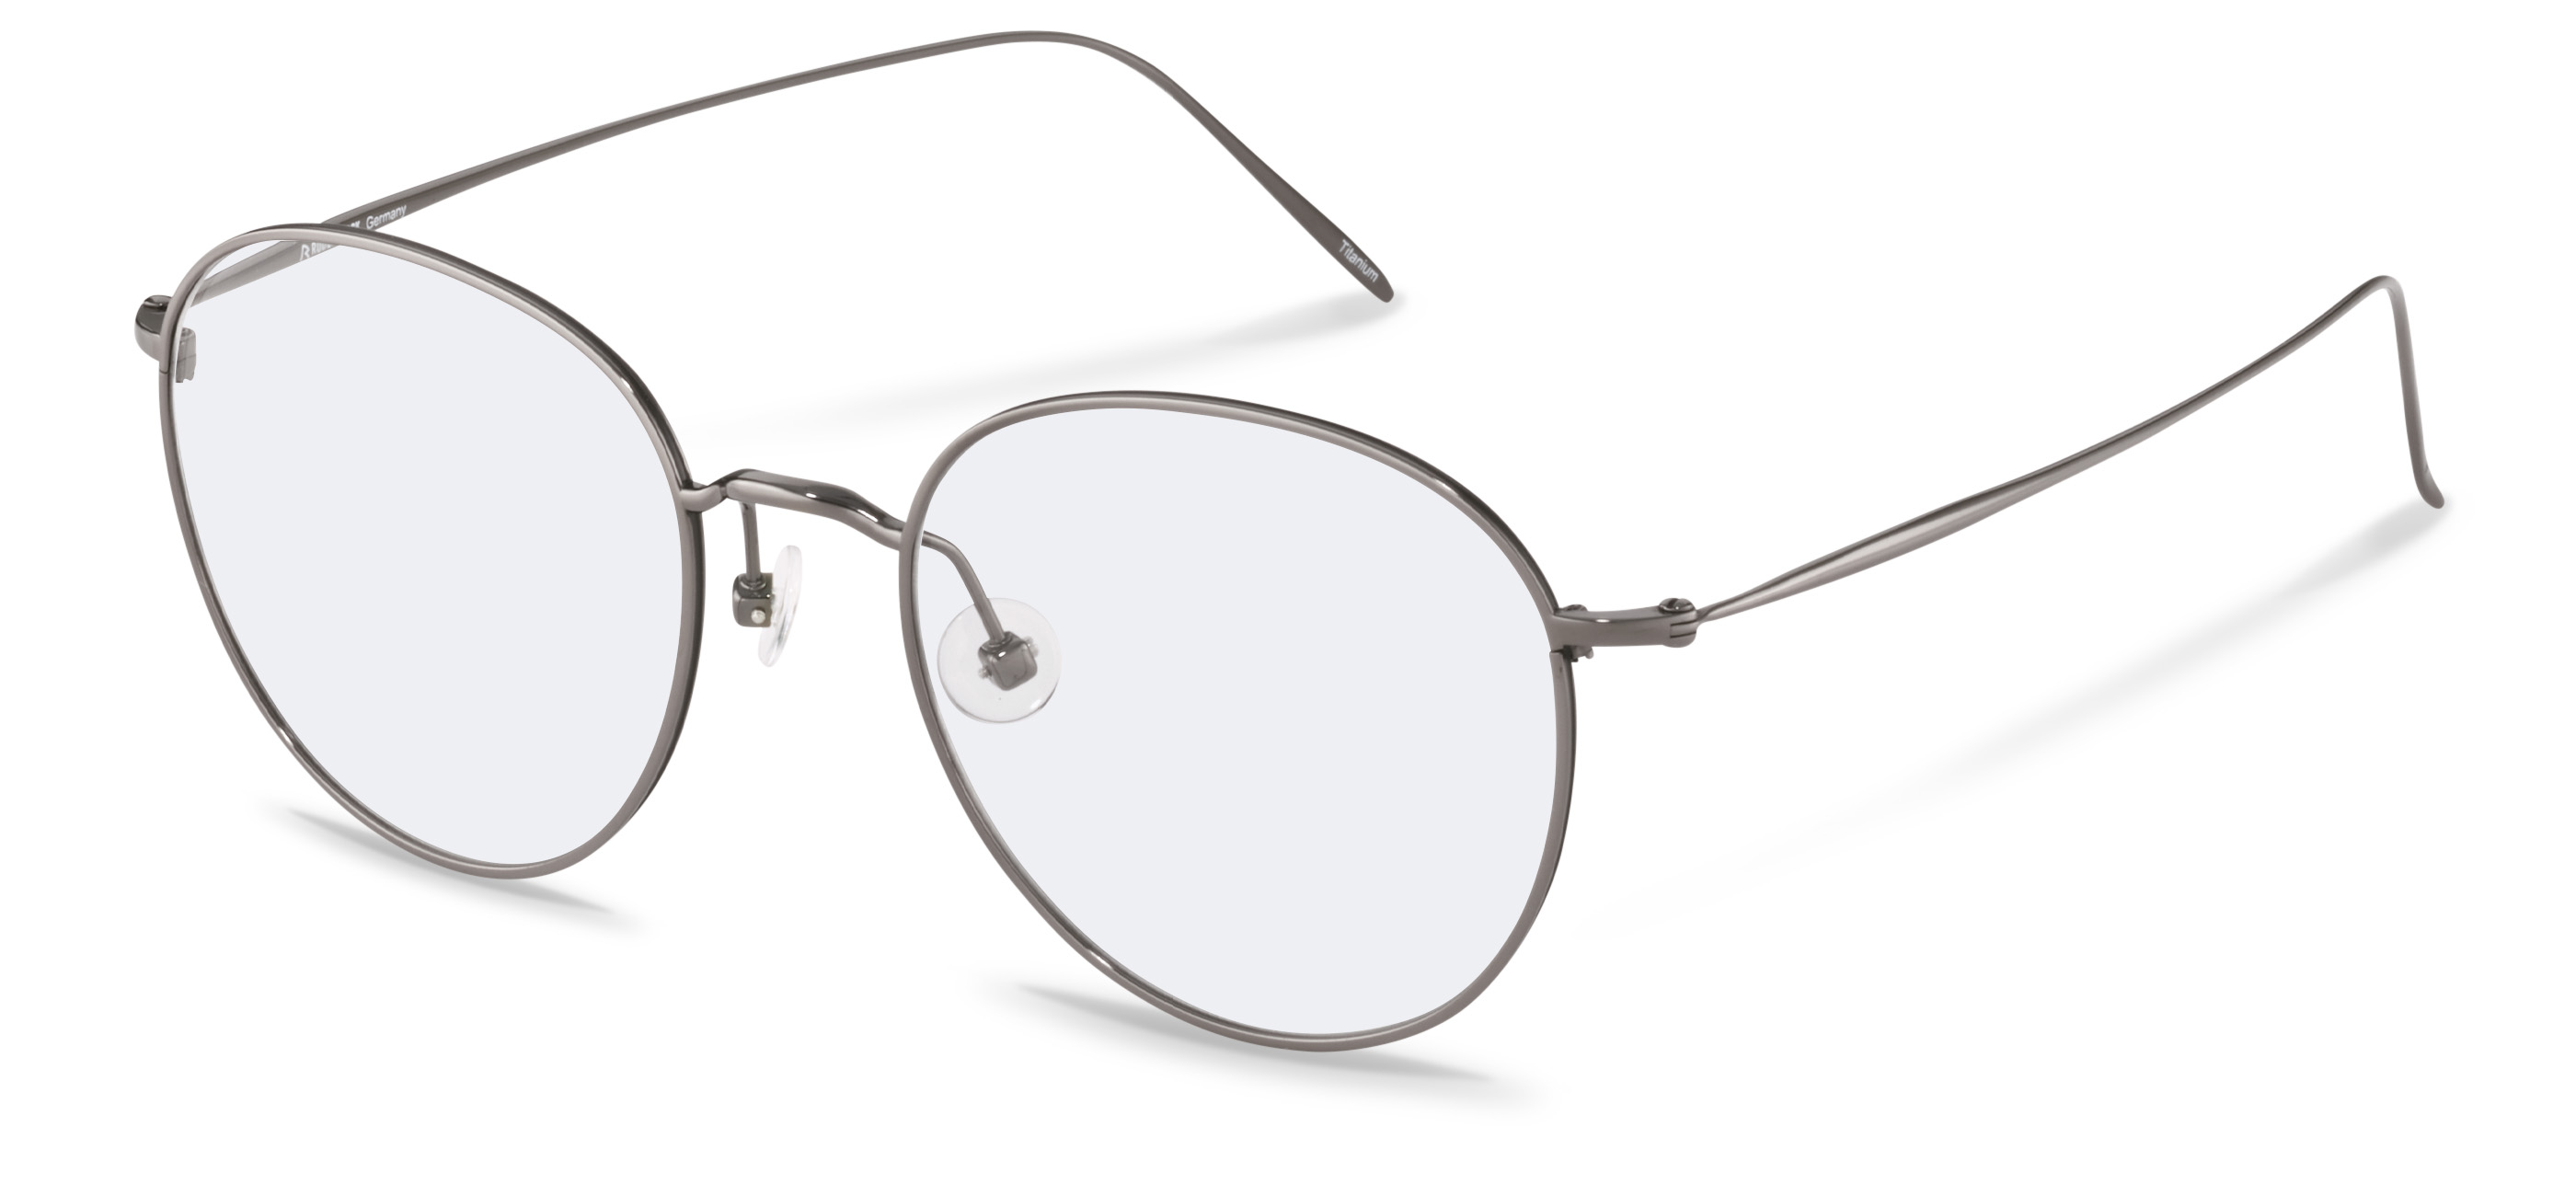 Rodenstock-Korekční brýle-R7119-silver/darkblue